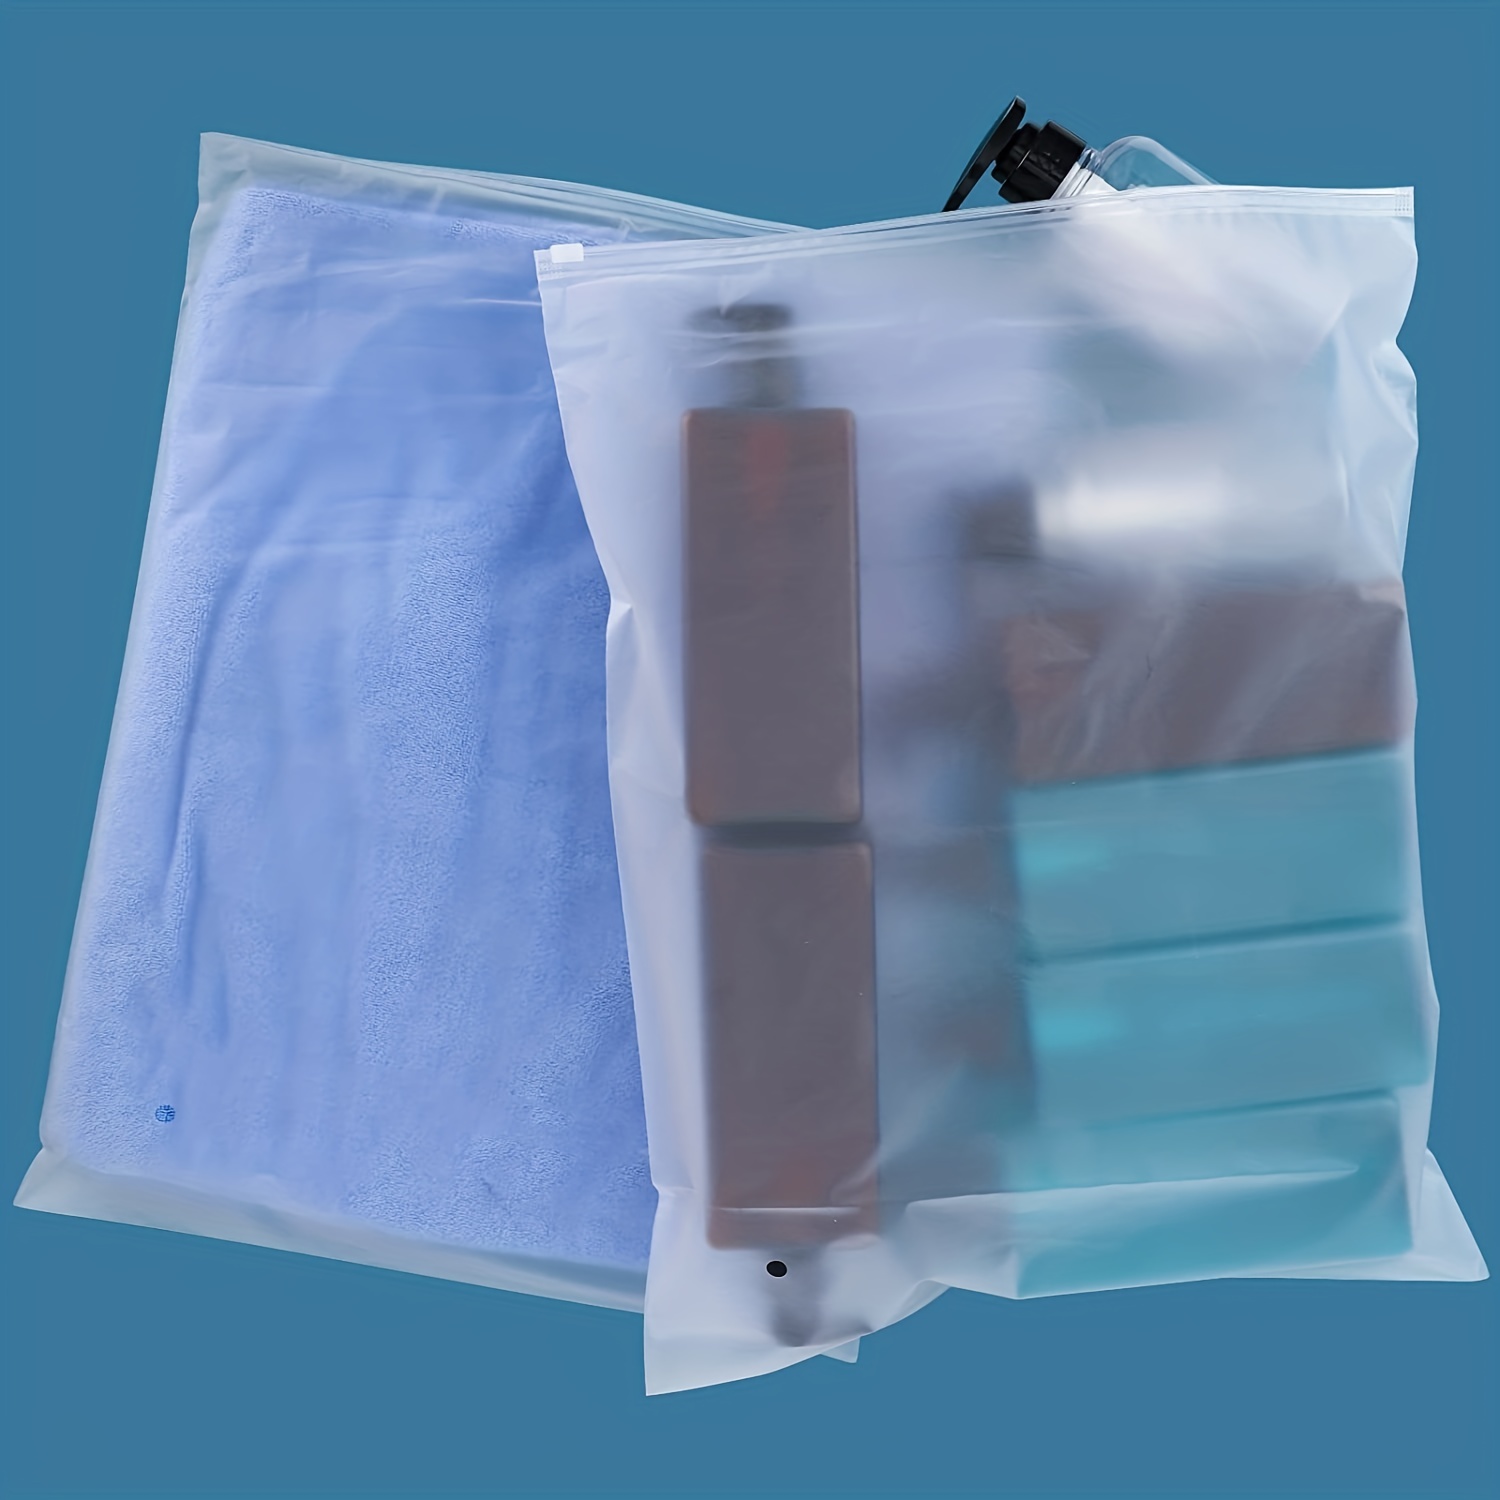 SIMPAK Sealed Foam Packaging: 17 in Bag Wd, 15 in Bag Lg, 17 Bags per Case,  17 PK